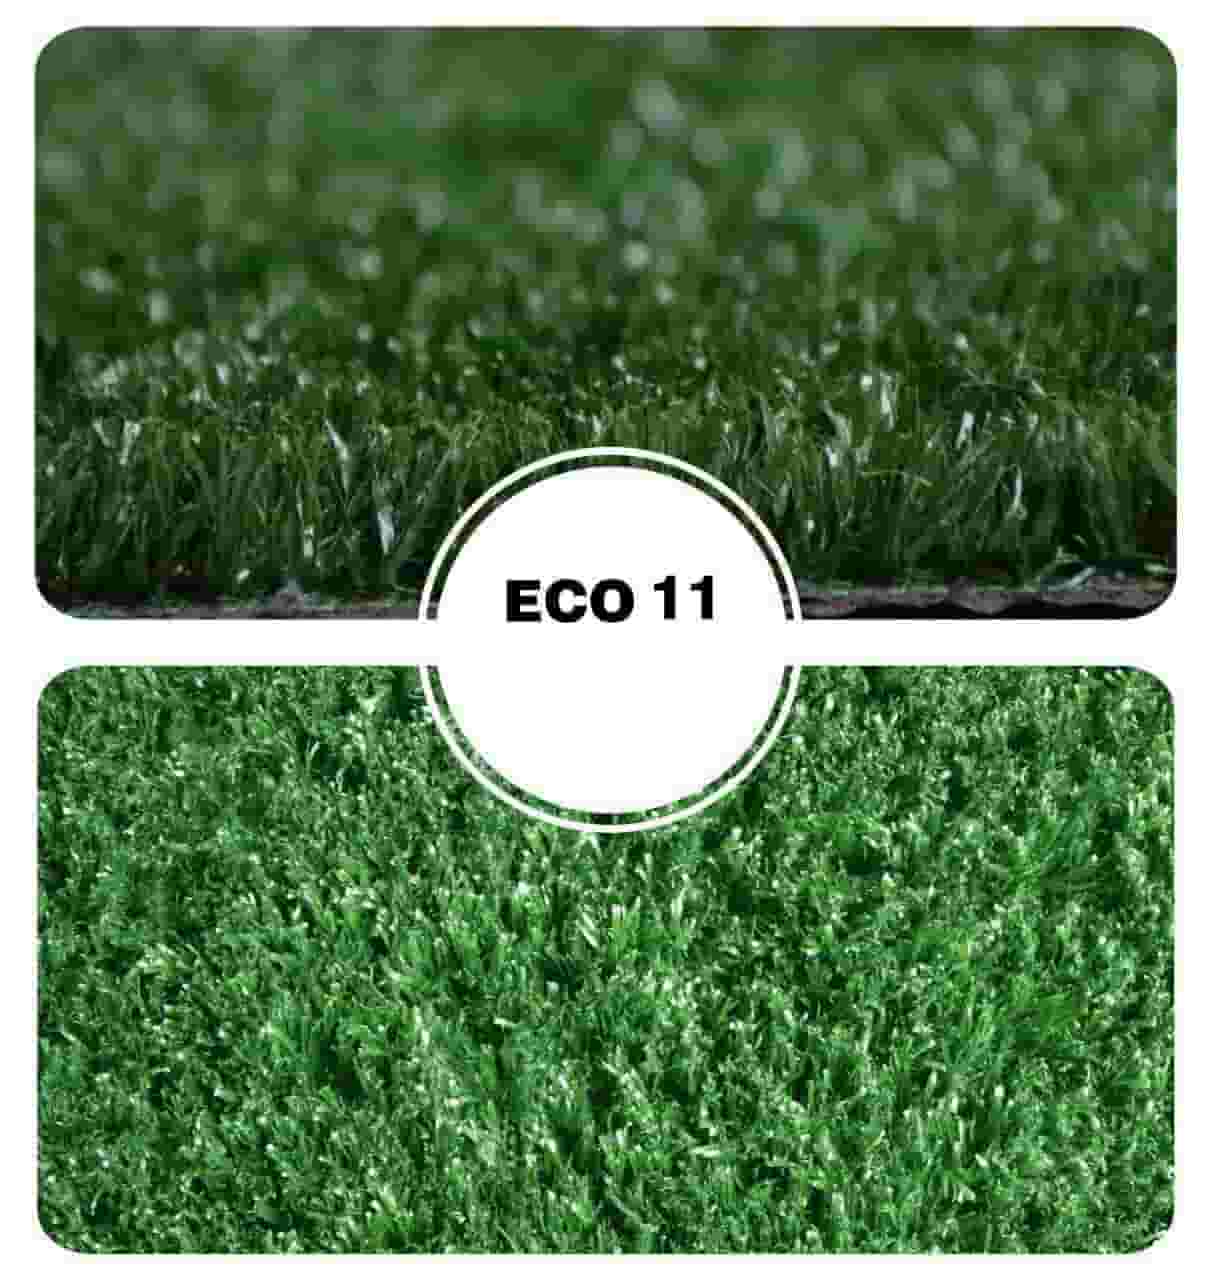 eco11